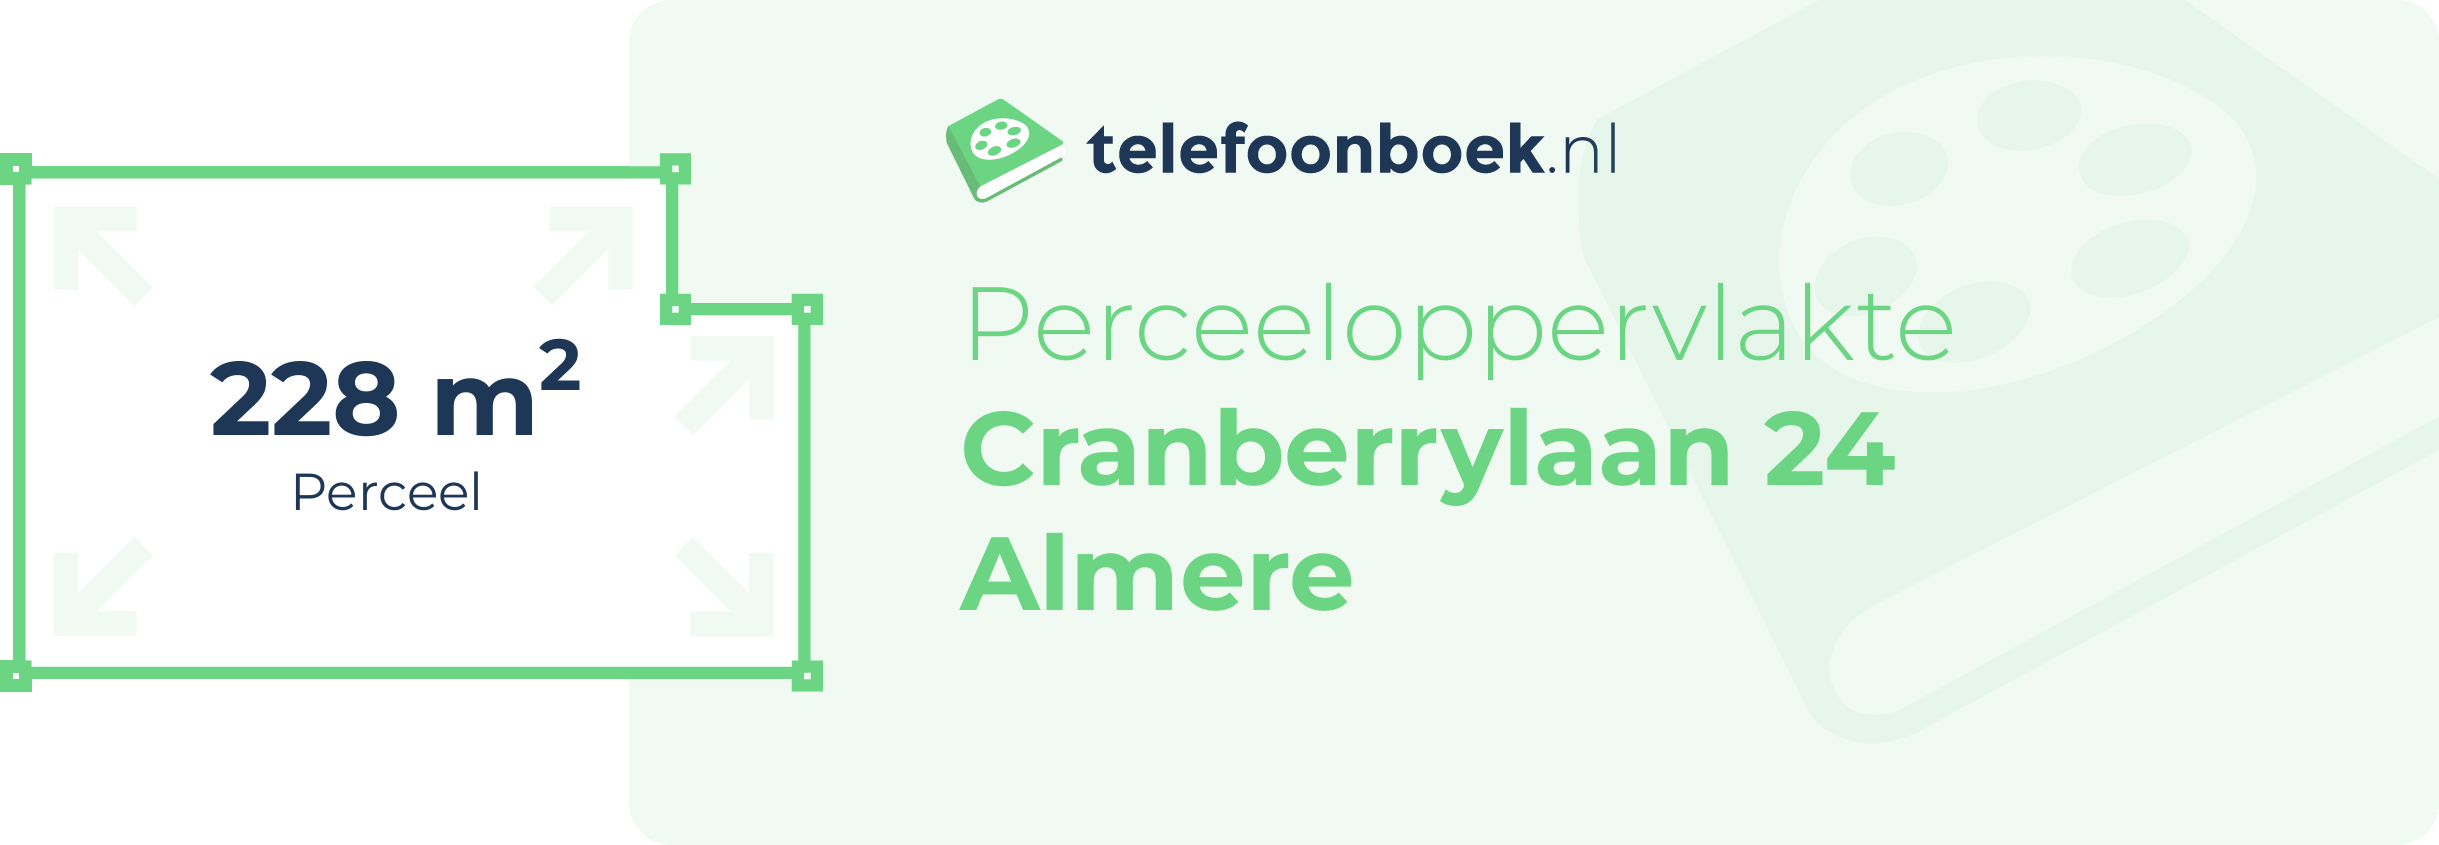 Perceeloppervlakte Cranberrylaan 24 Almere